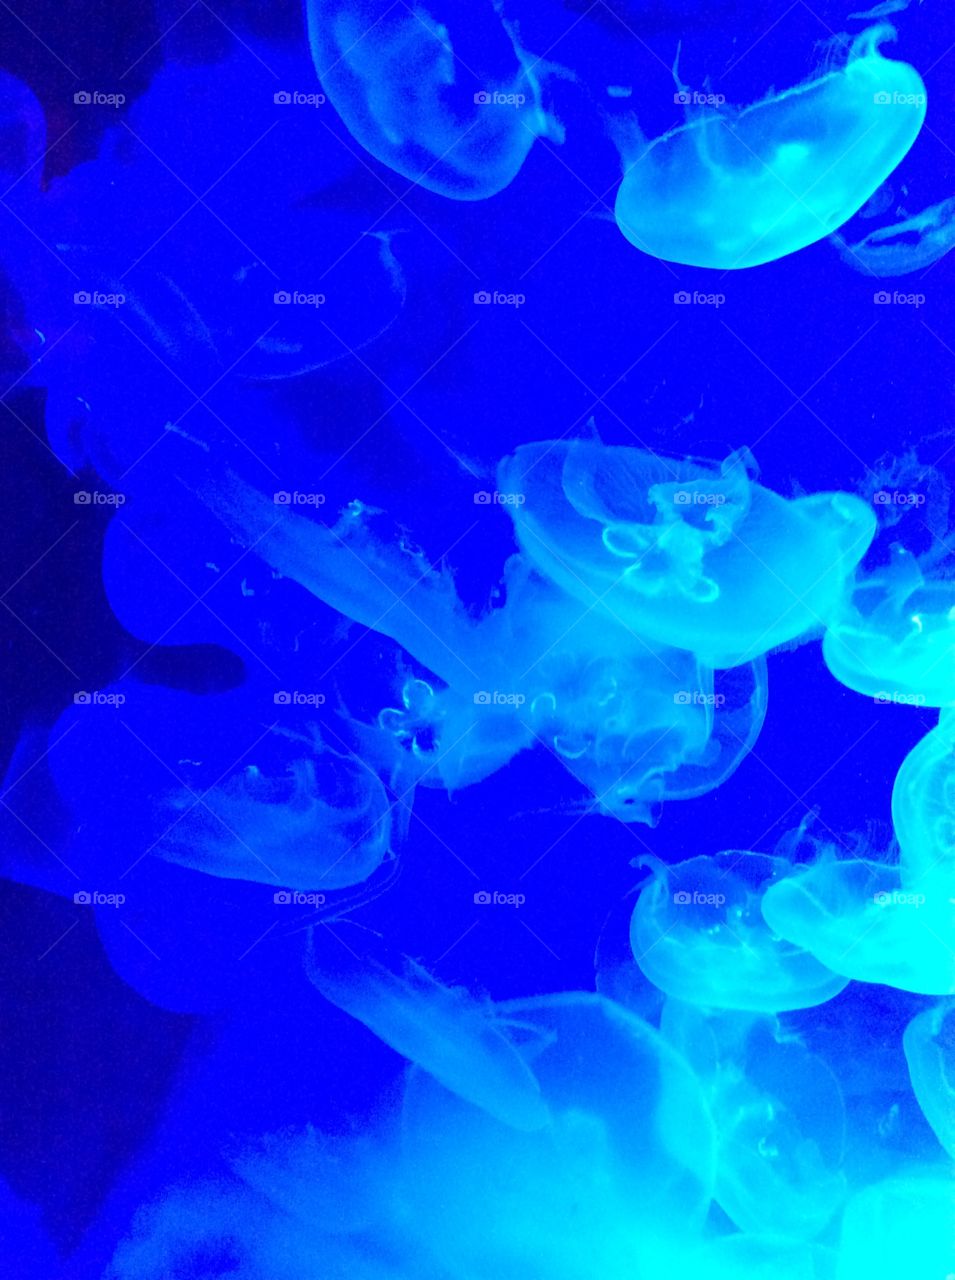 Jellyfish @ California
Science center
